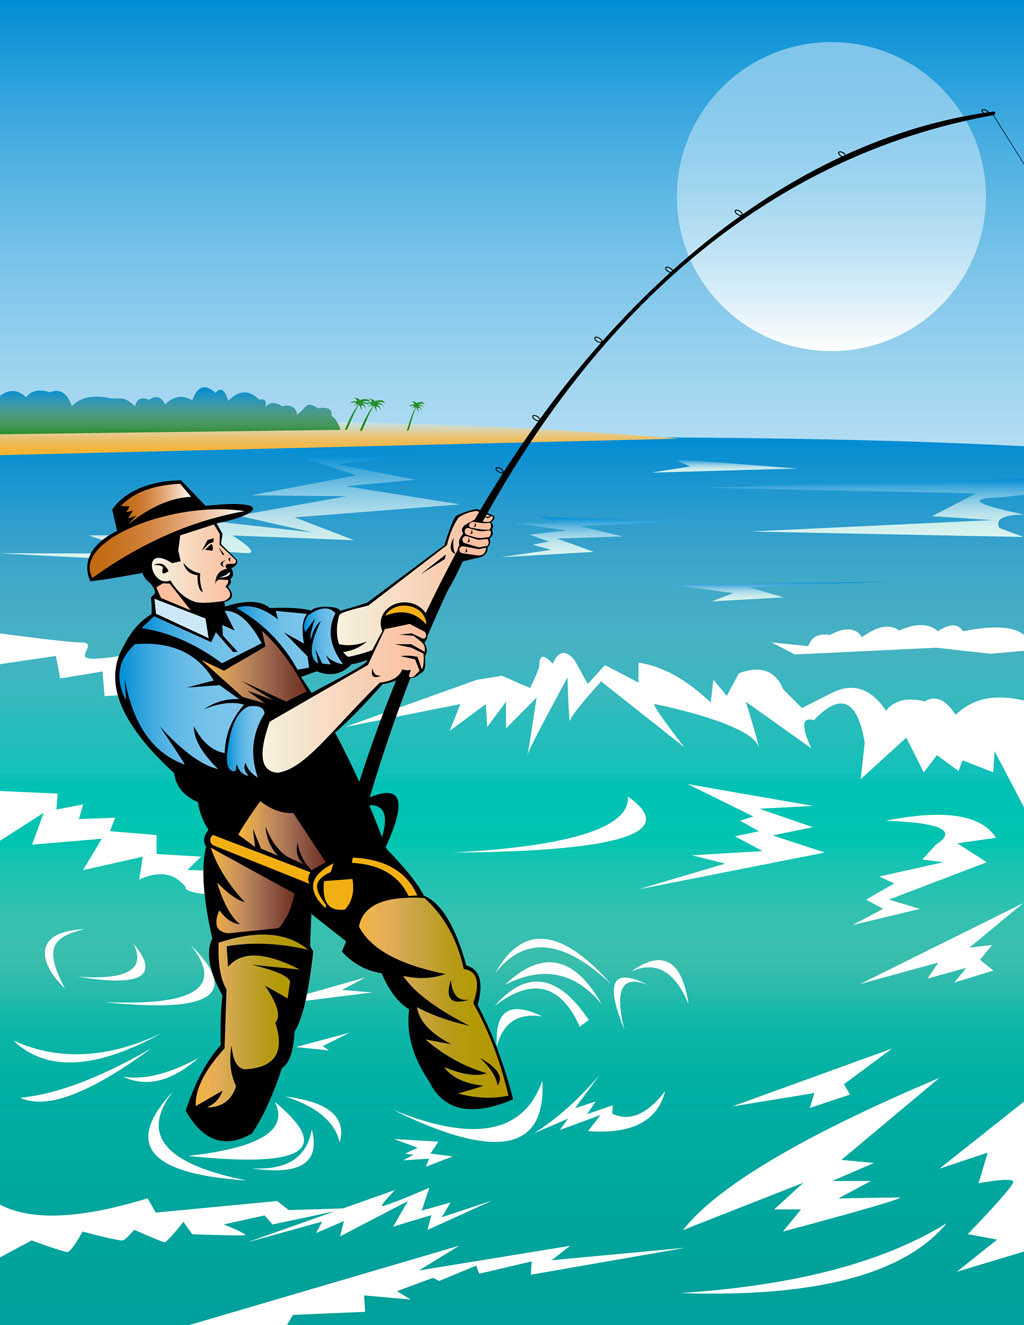 Download Fishing Man Poster Vector Art & Graphics | freevector.com